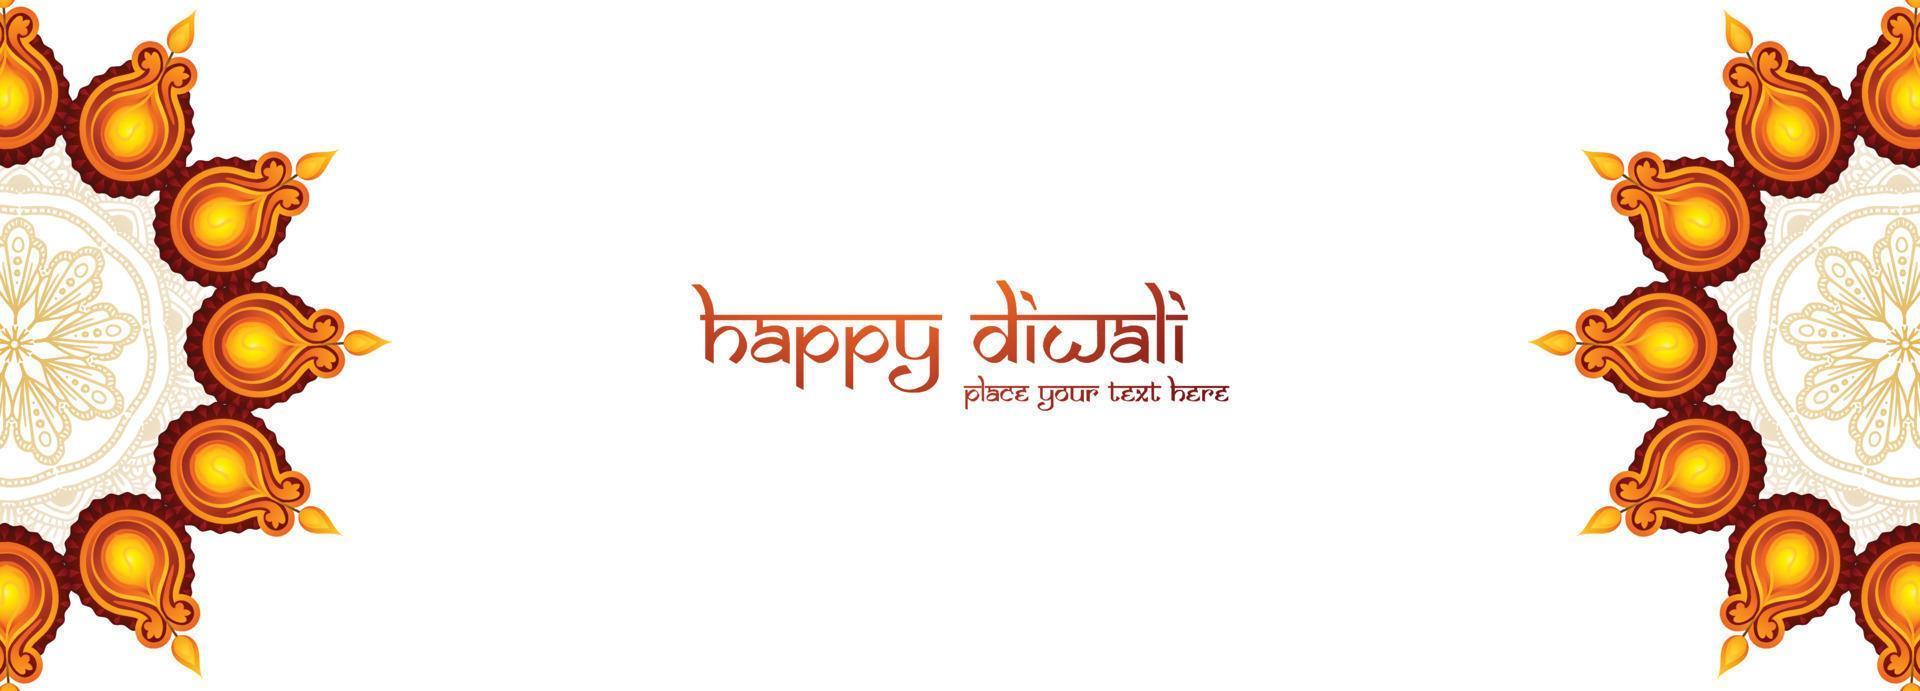 Happy diwali creative festival banner background vector